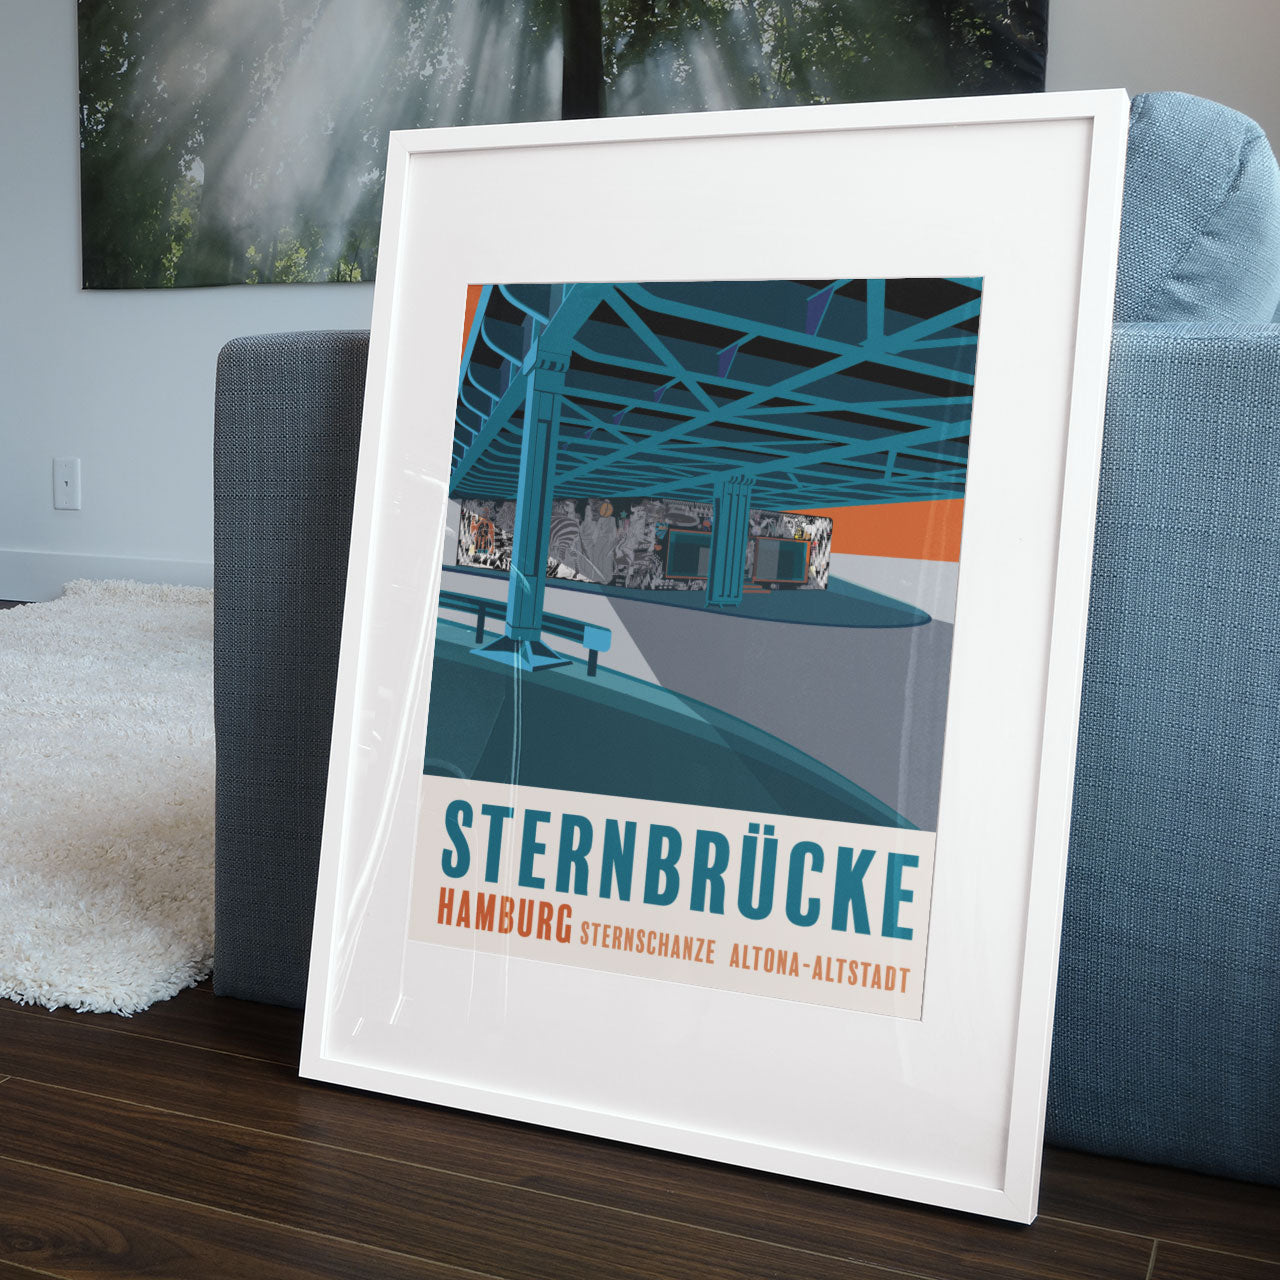 Hamburg Poster: Sternbrücke